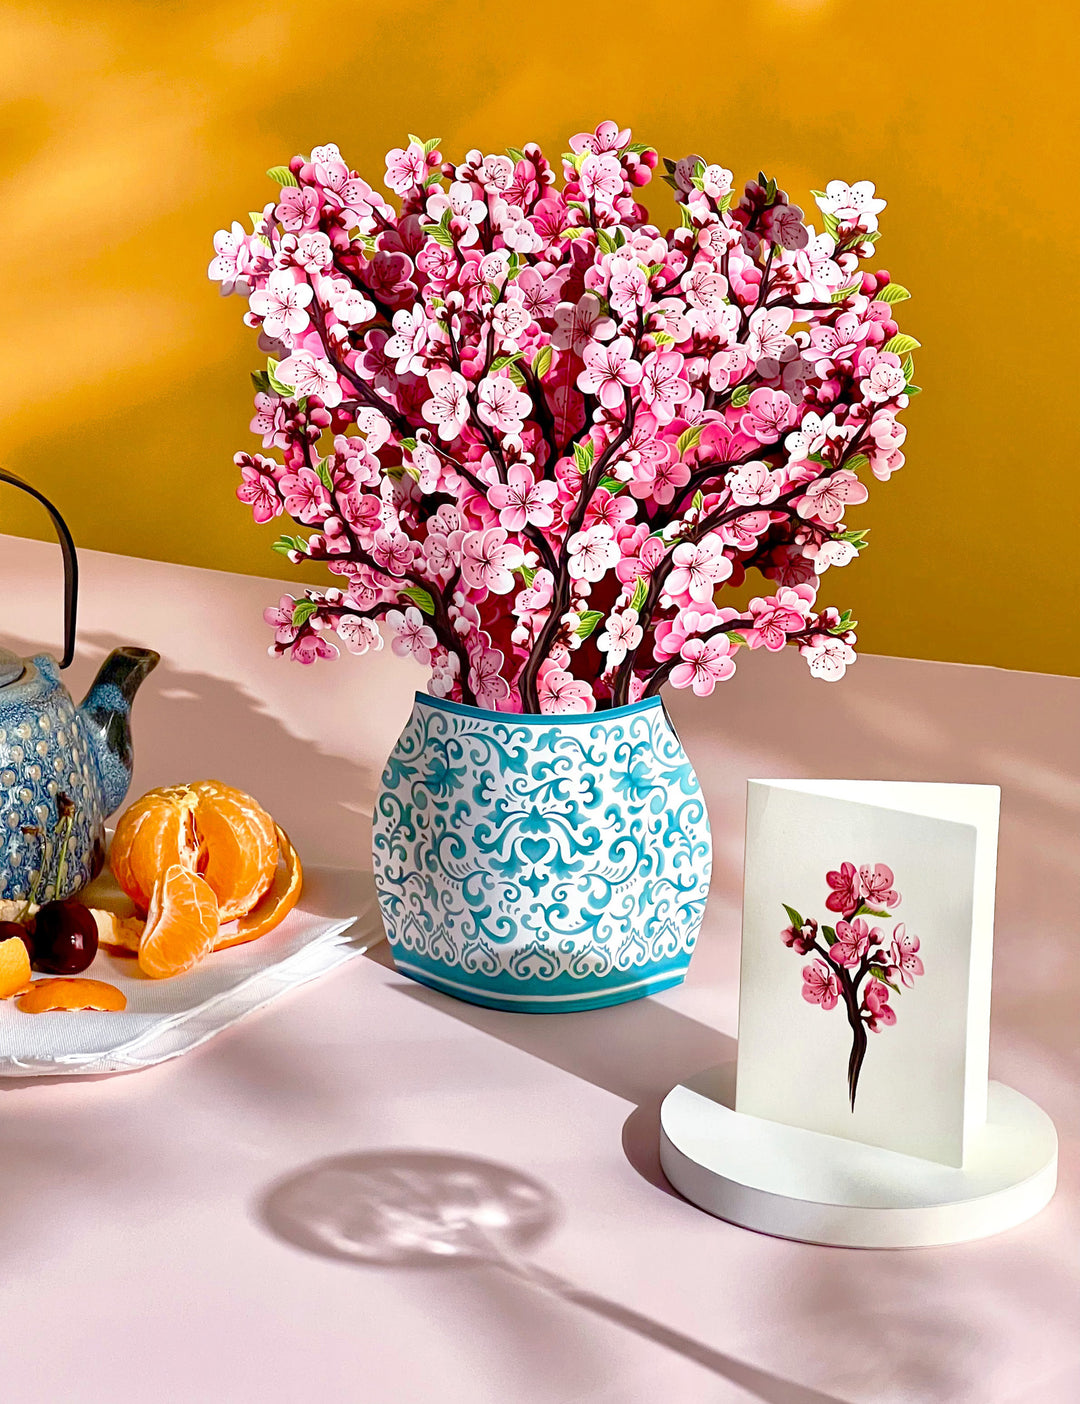 Pop Up Flower Bouquet Greeting Card - Cherry Blossoms